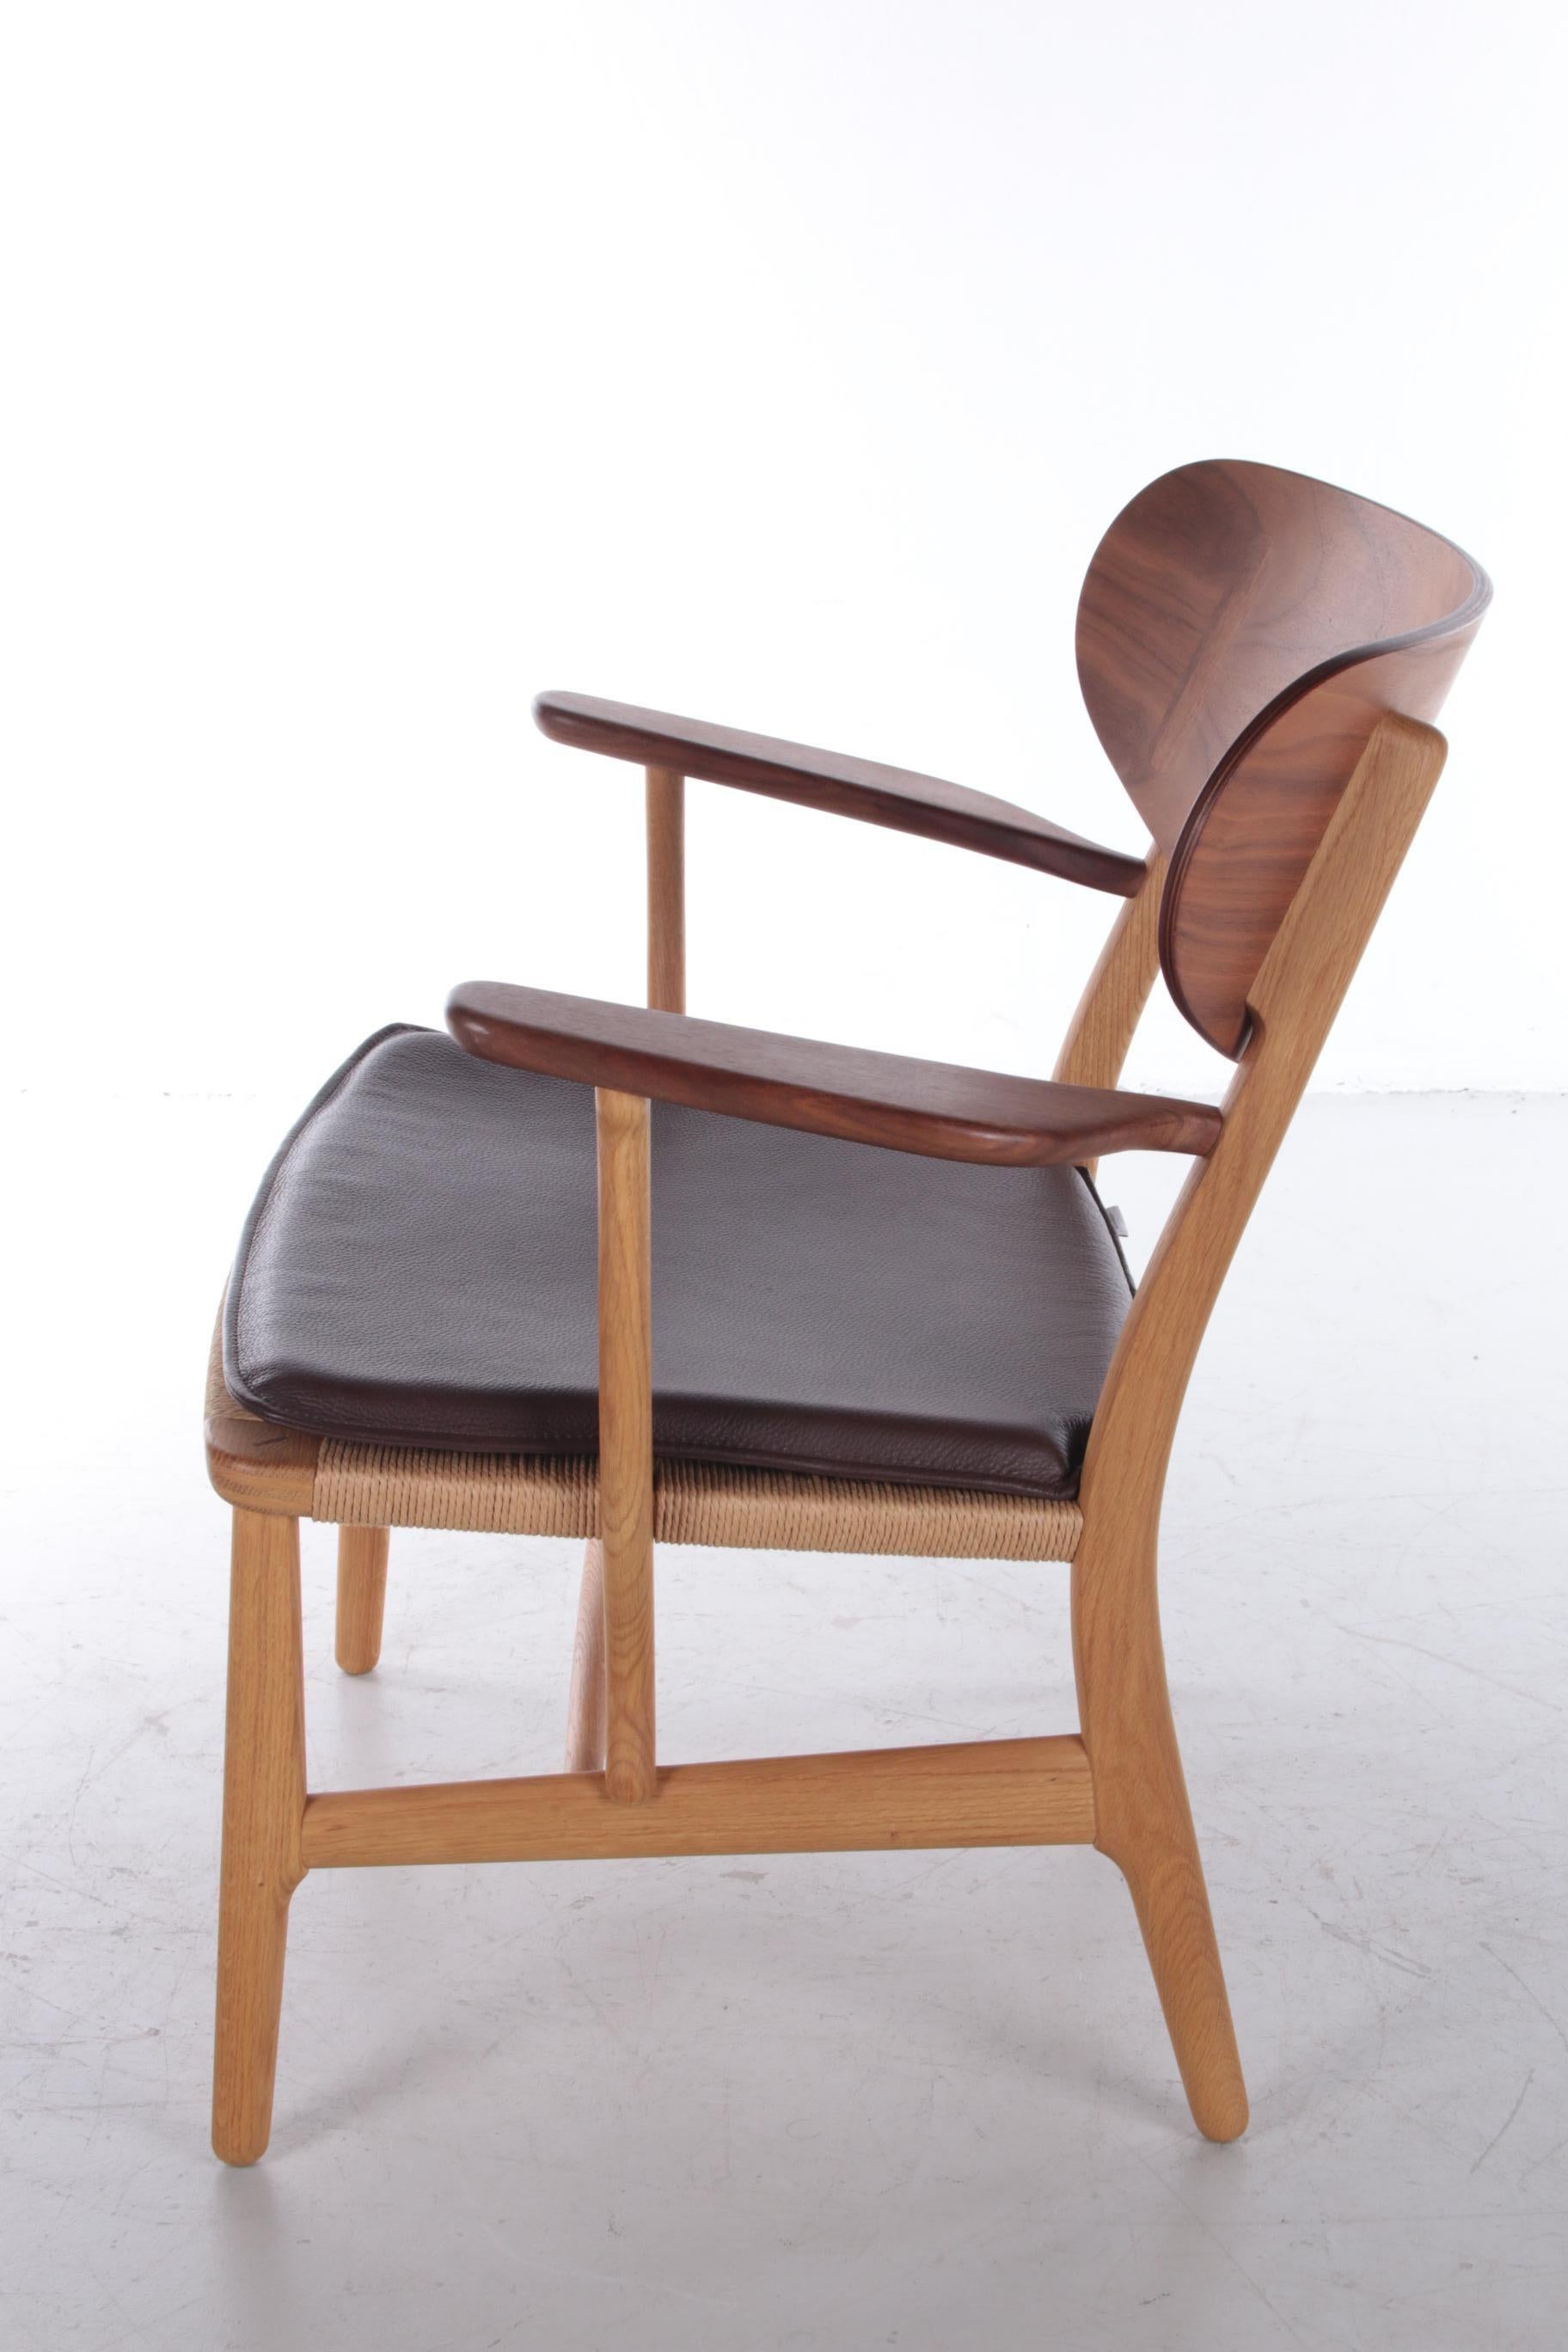 20th Century Model Ch22 Lounge Chair by Hans J. Wegner for Carl Hansen & Søn